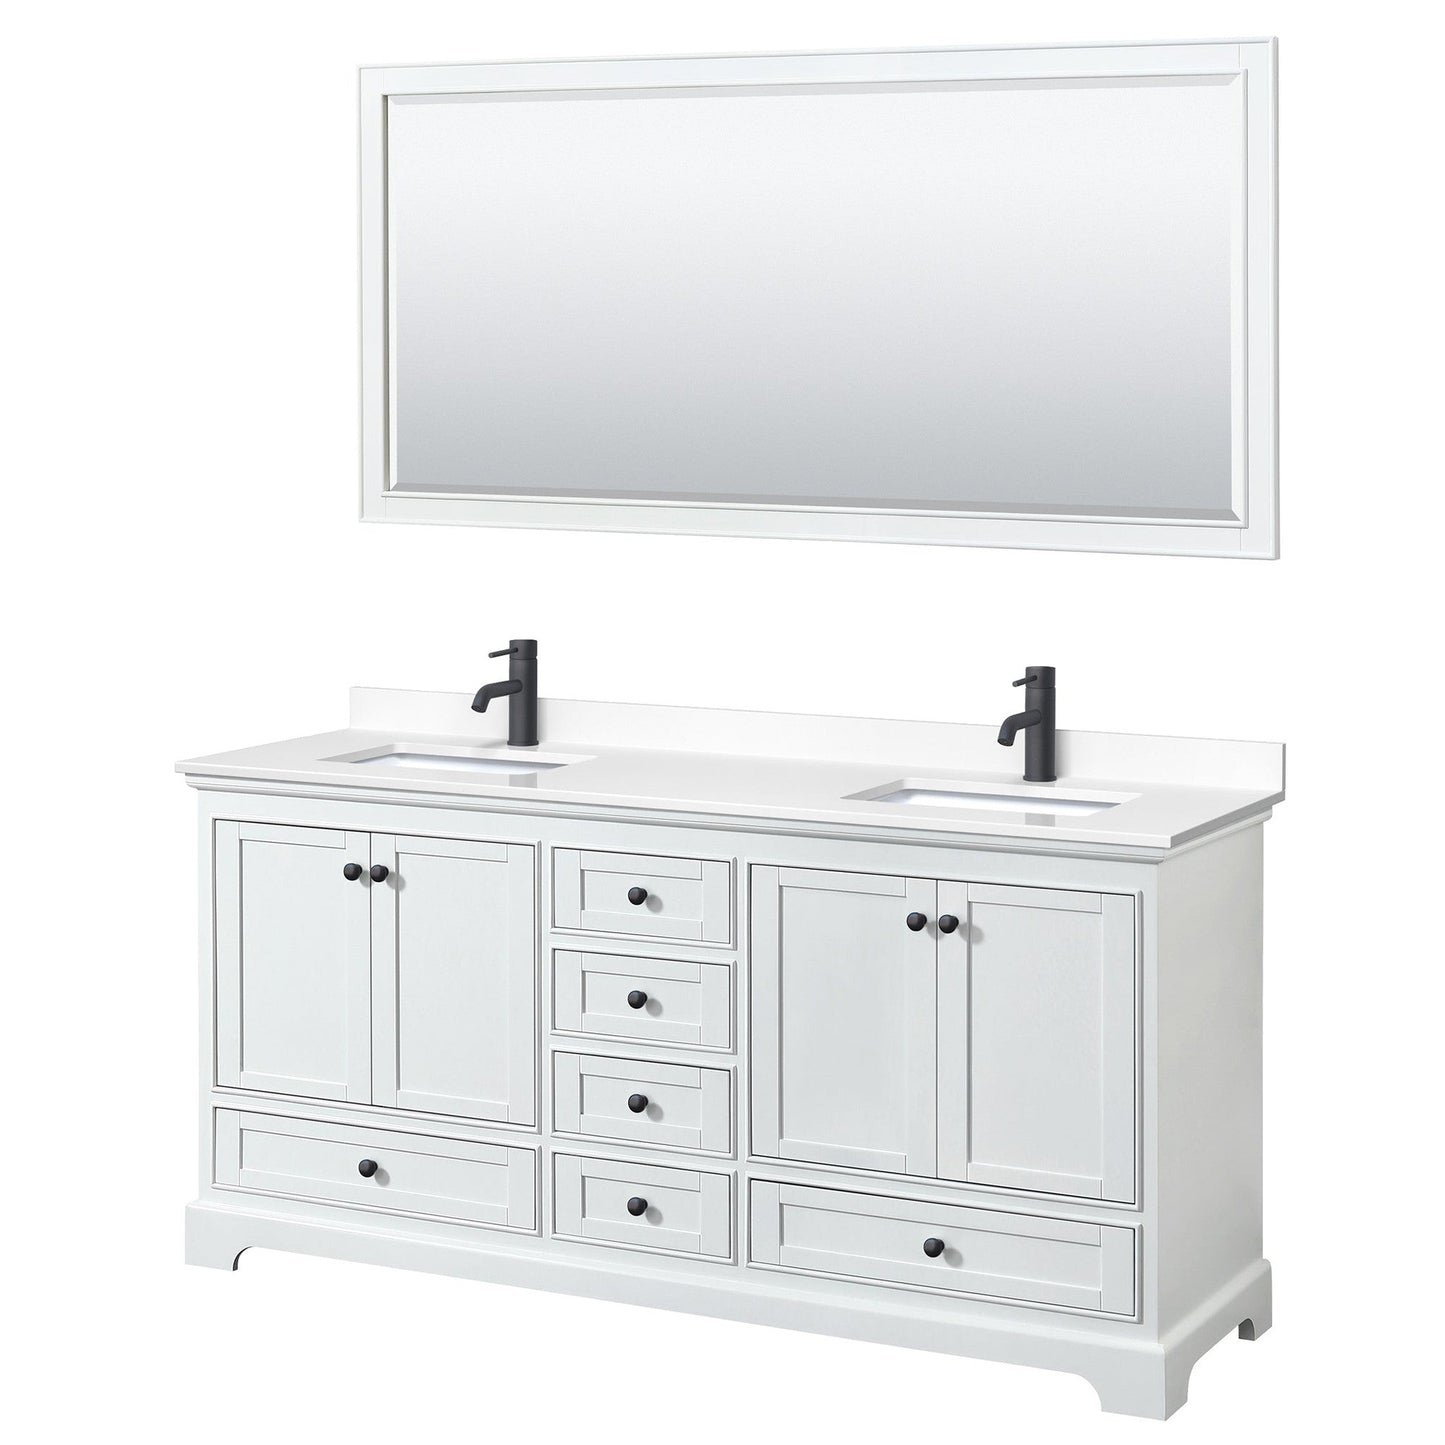 Deborah 72" Double Bathroom Vanity in White, White Cultured Marble Countertop, Undermount Square Sinks, Matte Black Trim, 70" Mirror